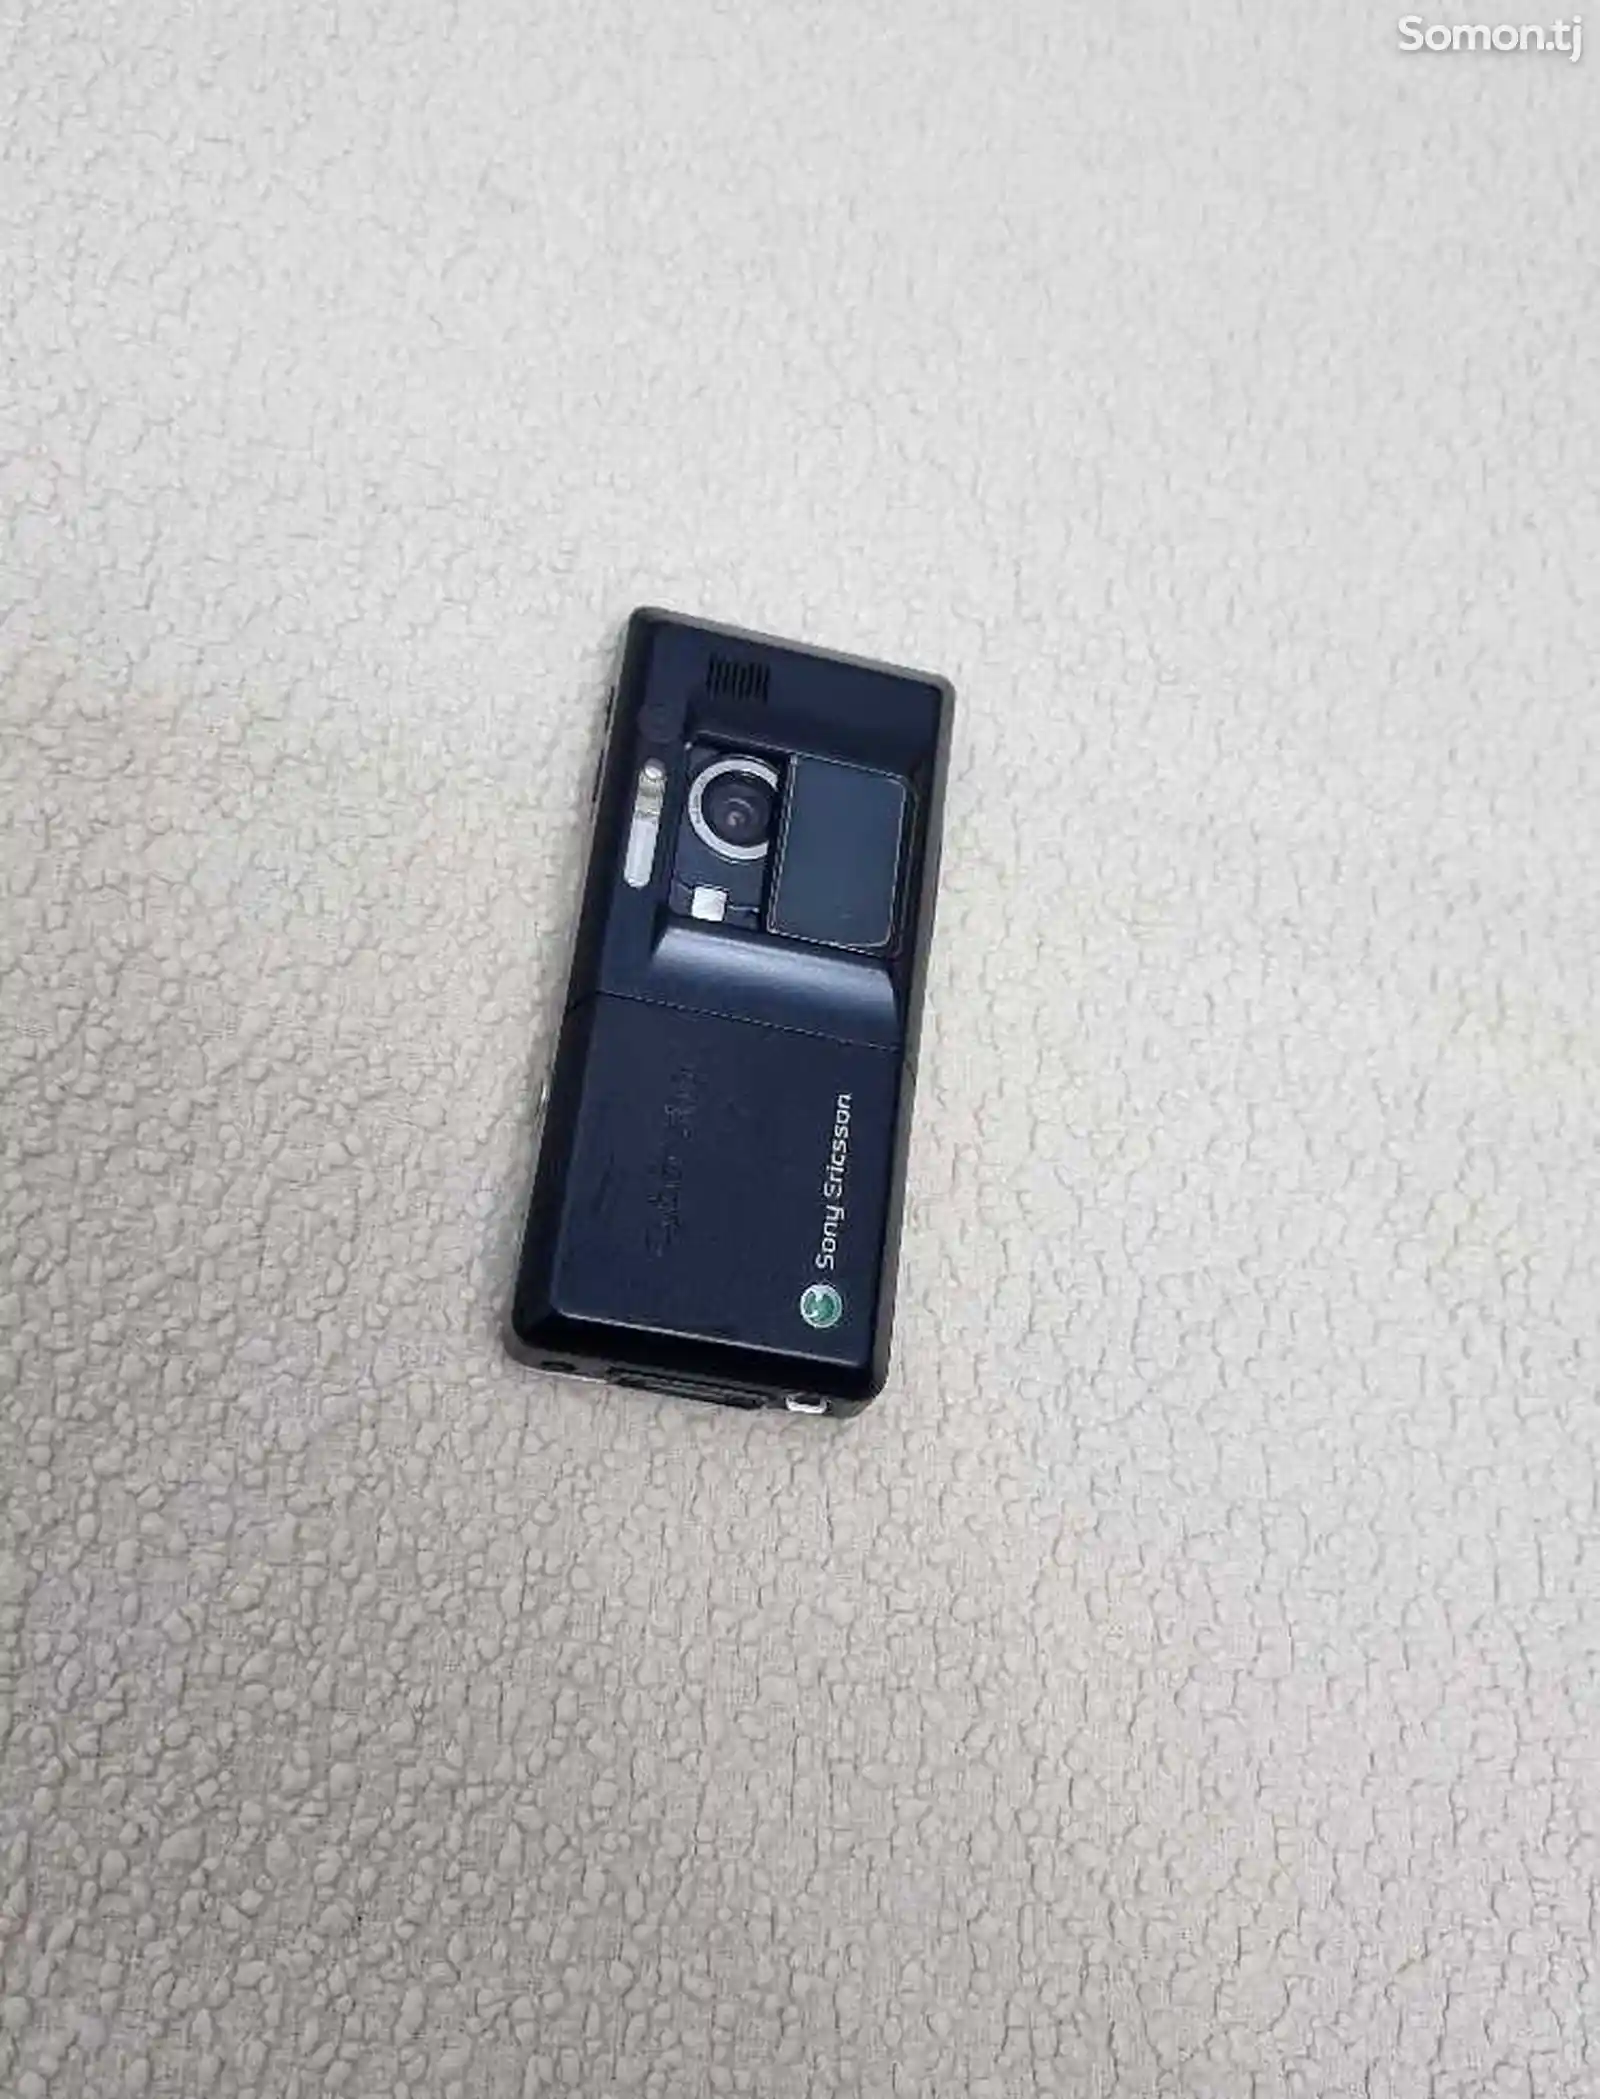 Sony Ericsson K810i-2